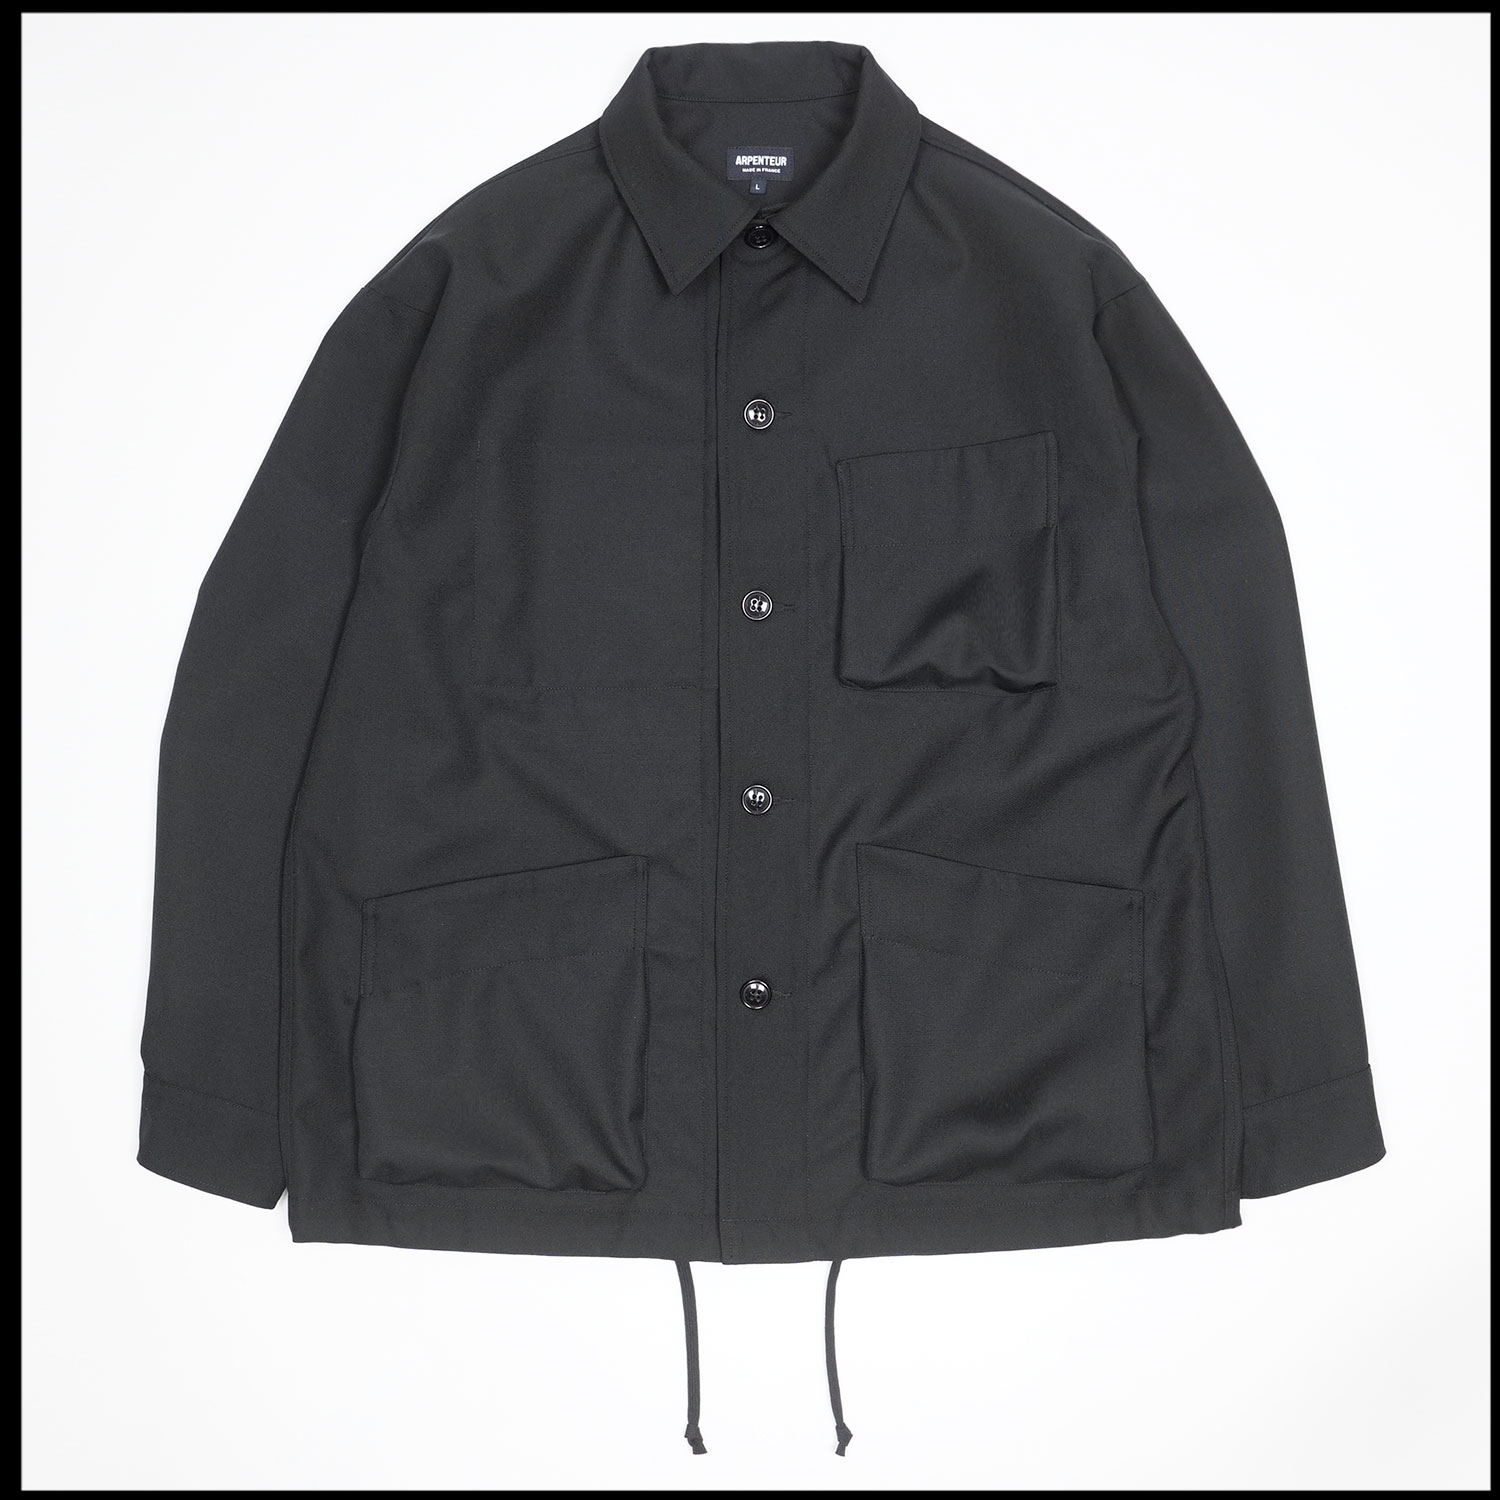 NIVA jacket in Black color by Arpenteur